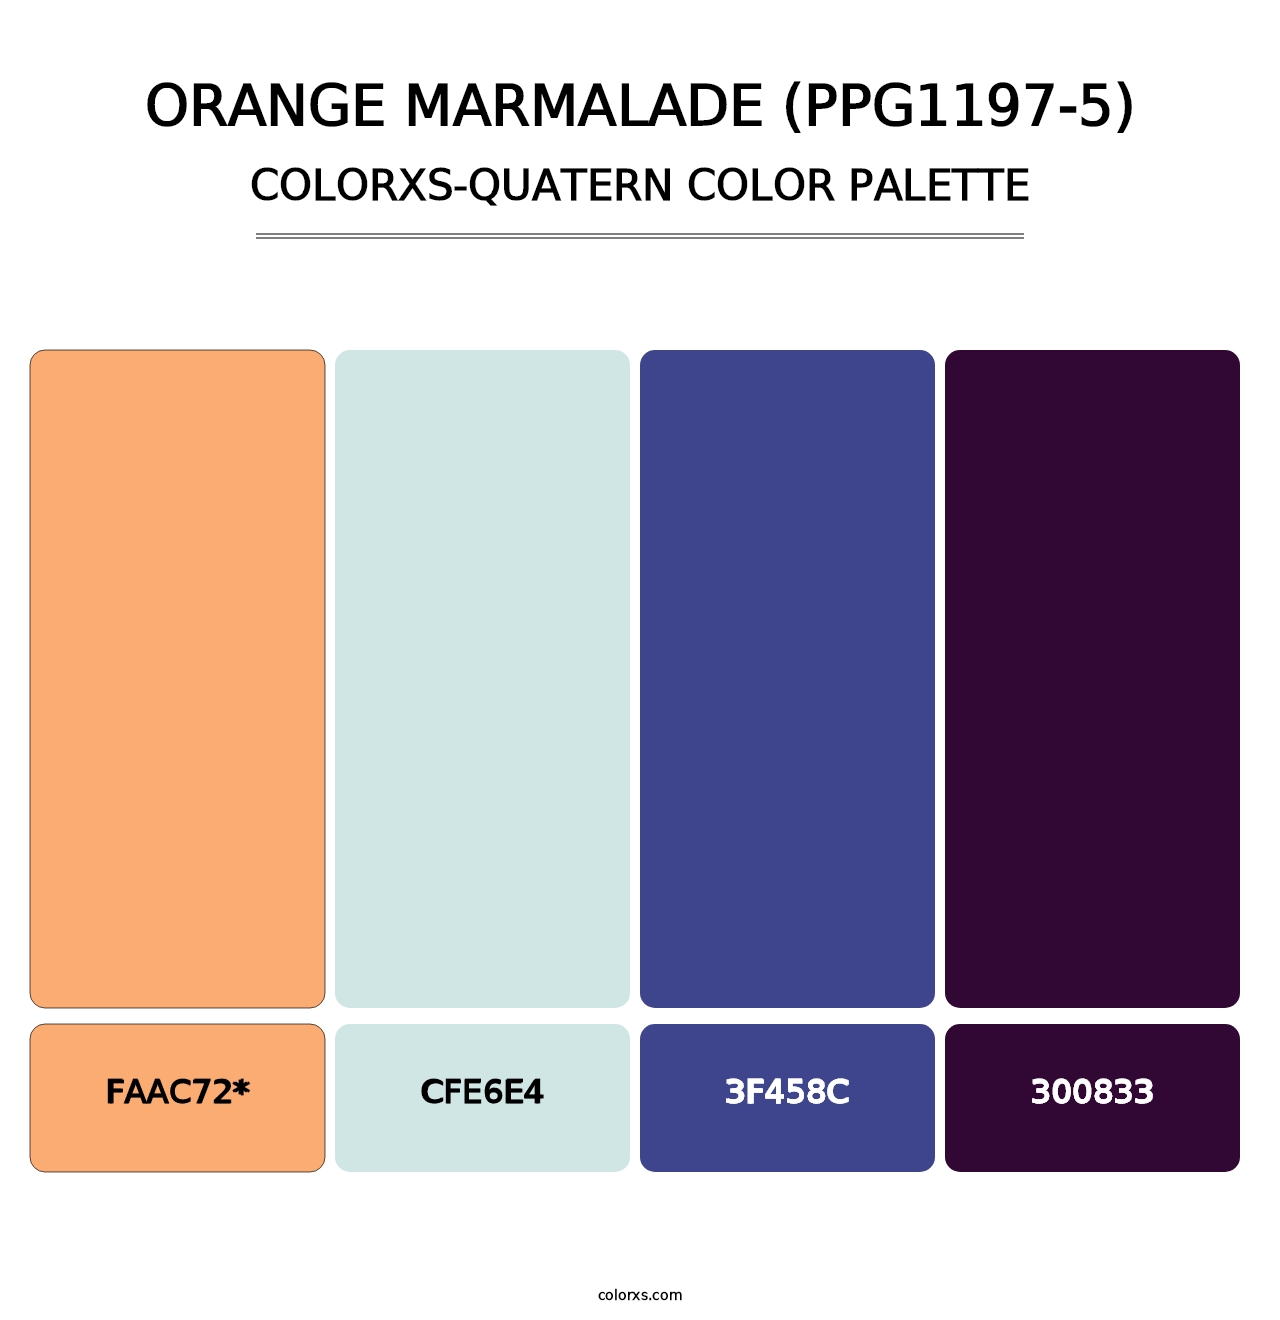 Orange Marmalade (PPG1197-5) - Colorxs Quatern Palette